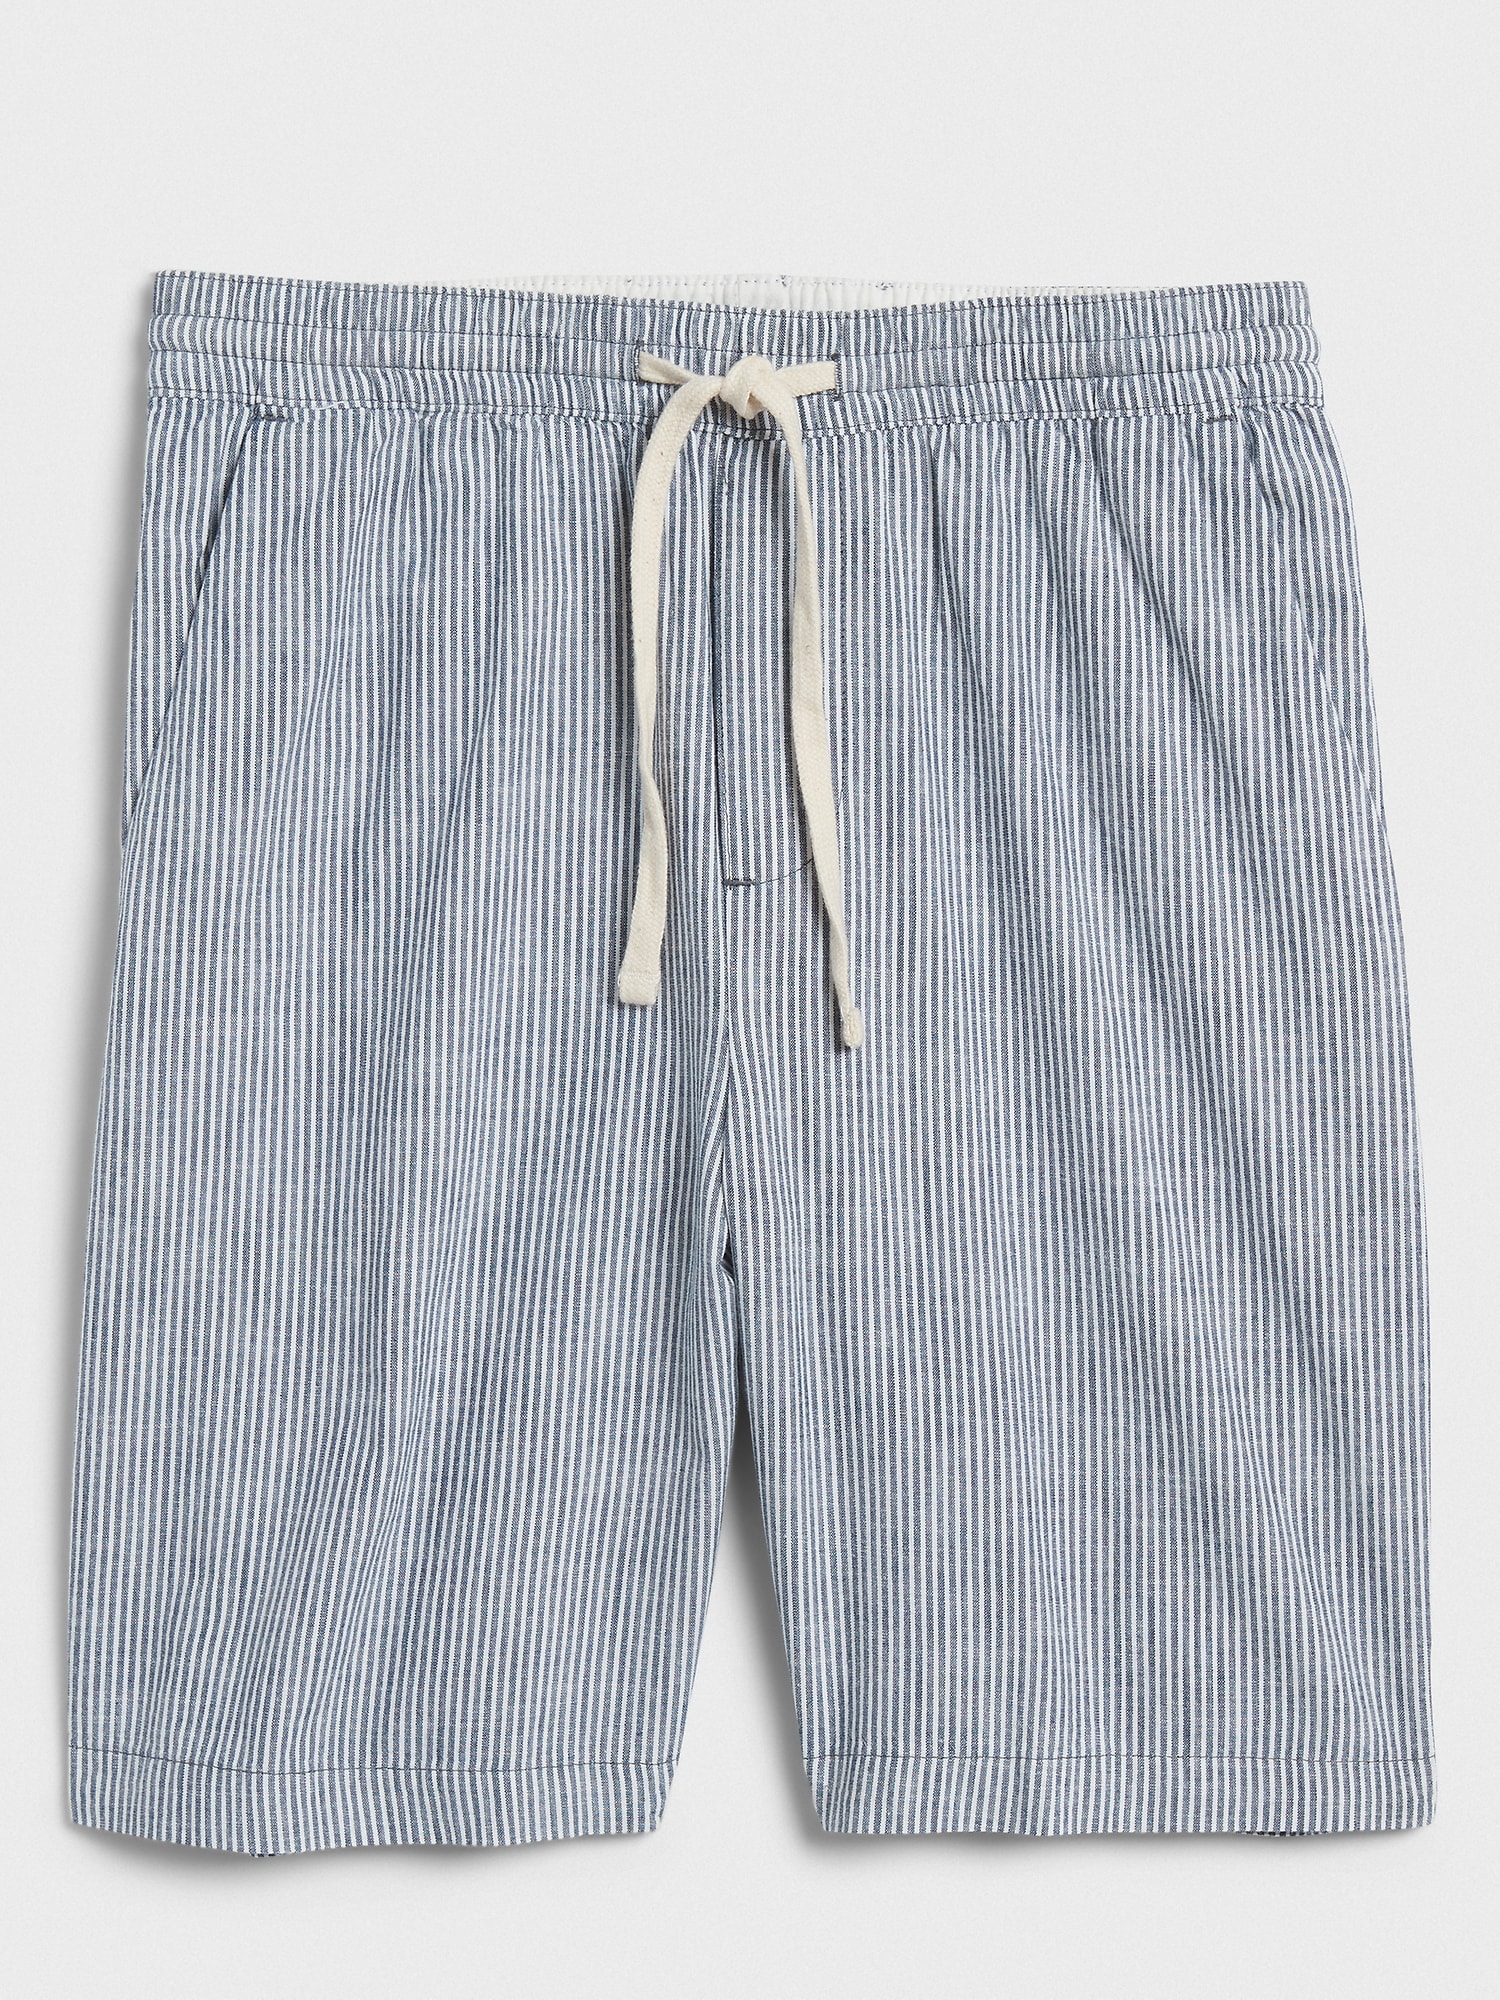 9" Striped Deck Shorts